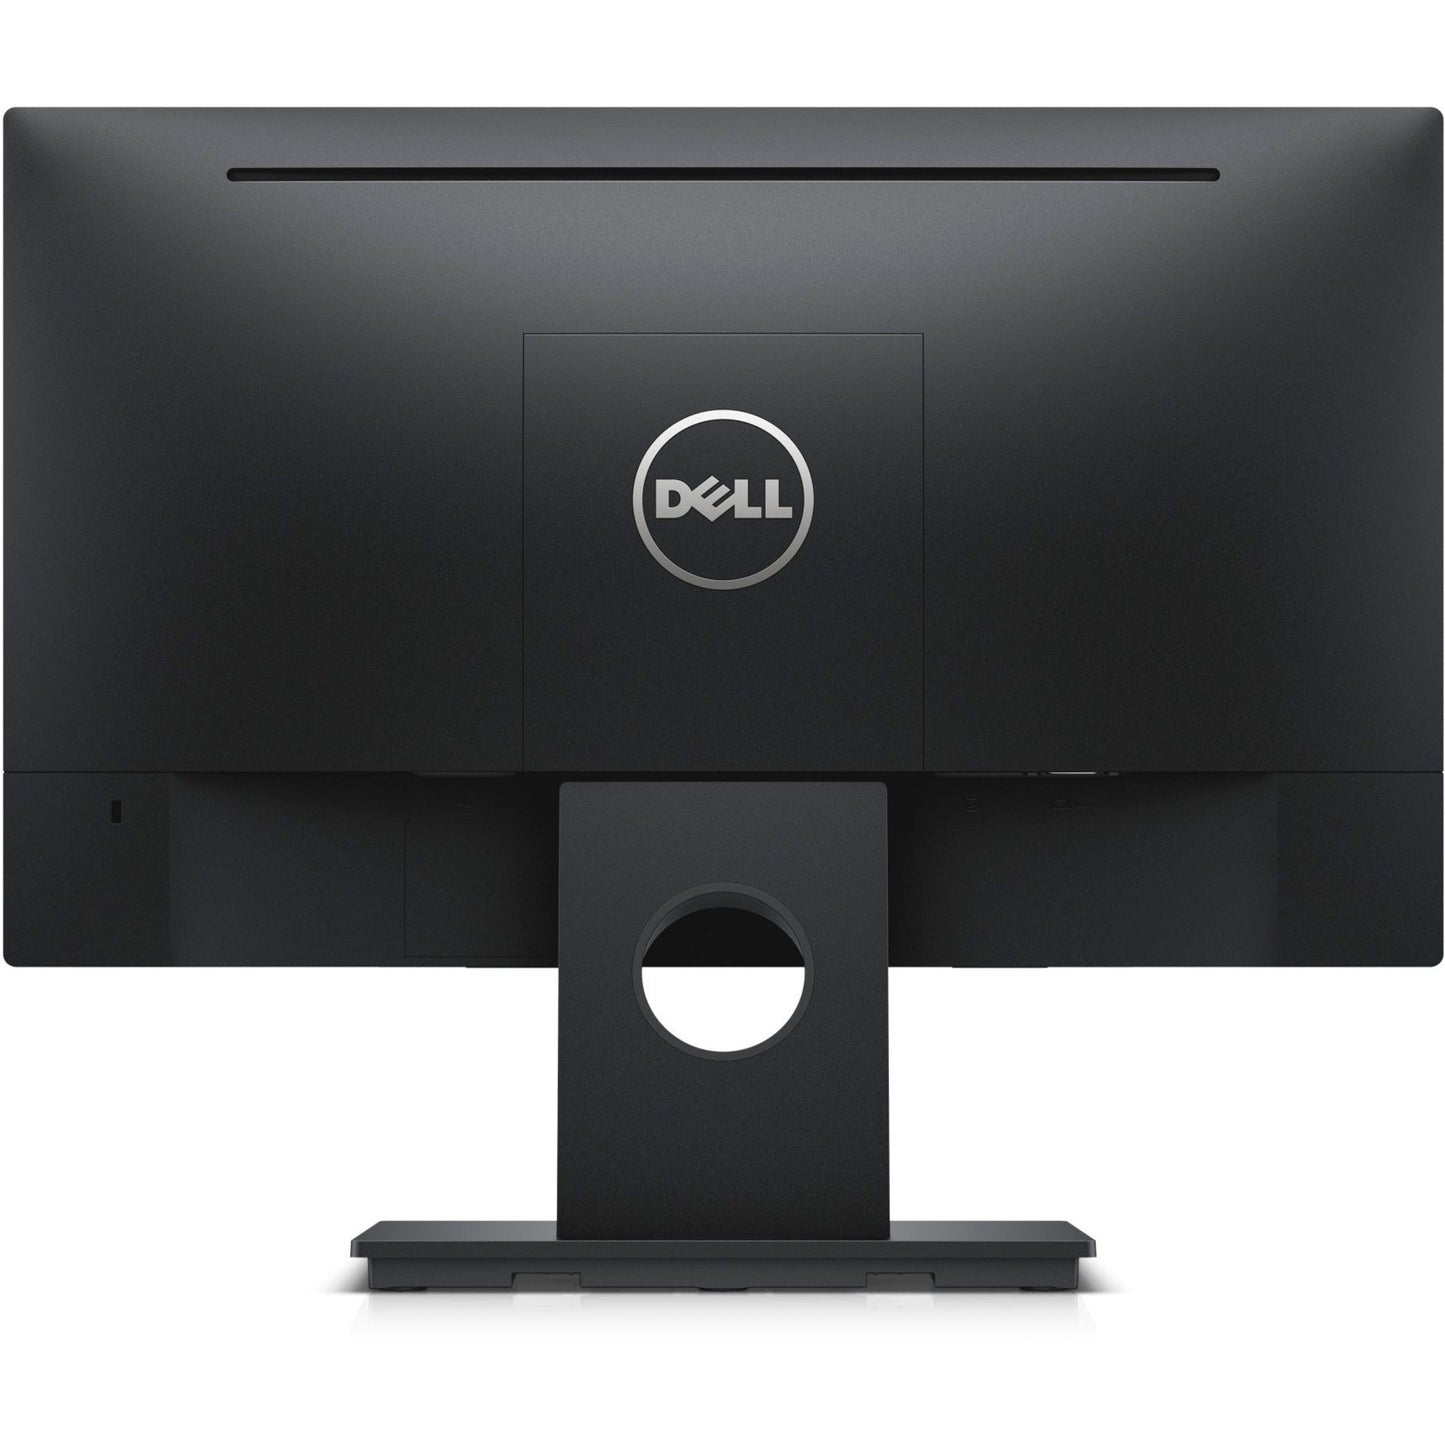 Dell E1916HV 18.5" WXGA LCD Monitor - 16:9 - Black